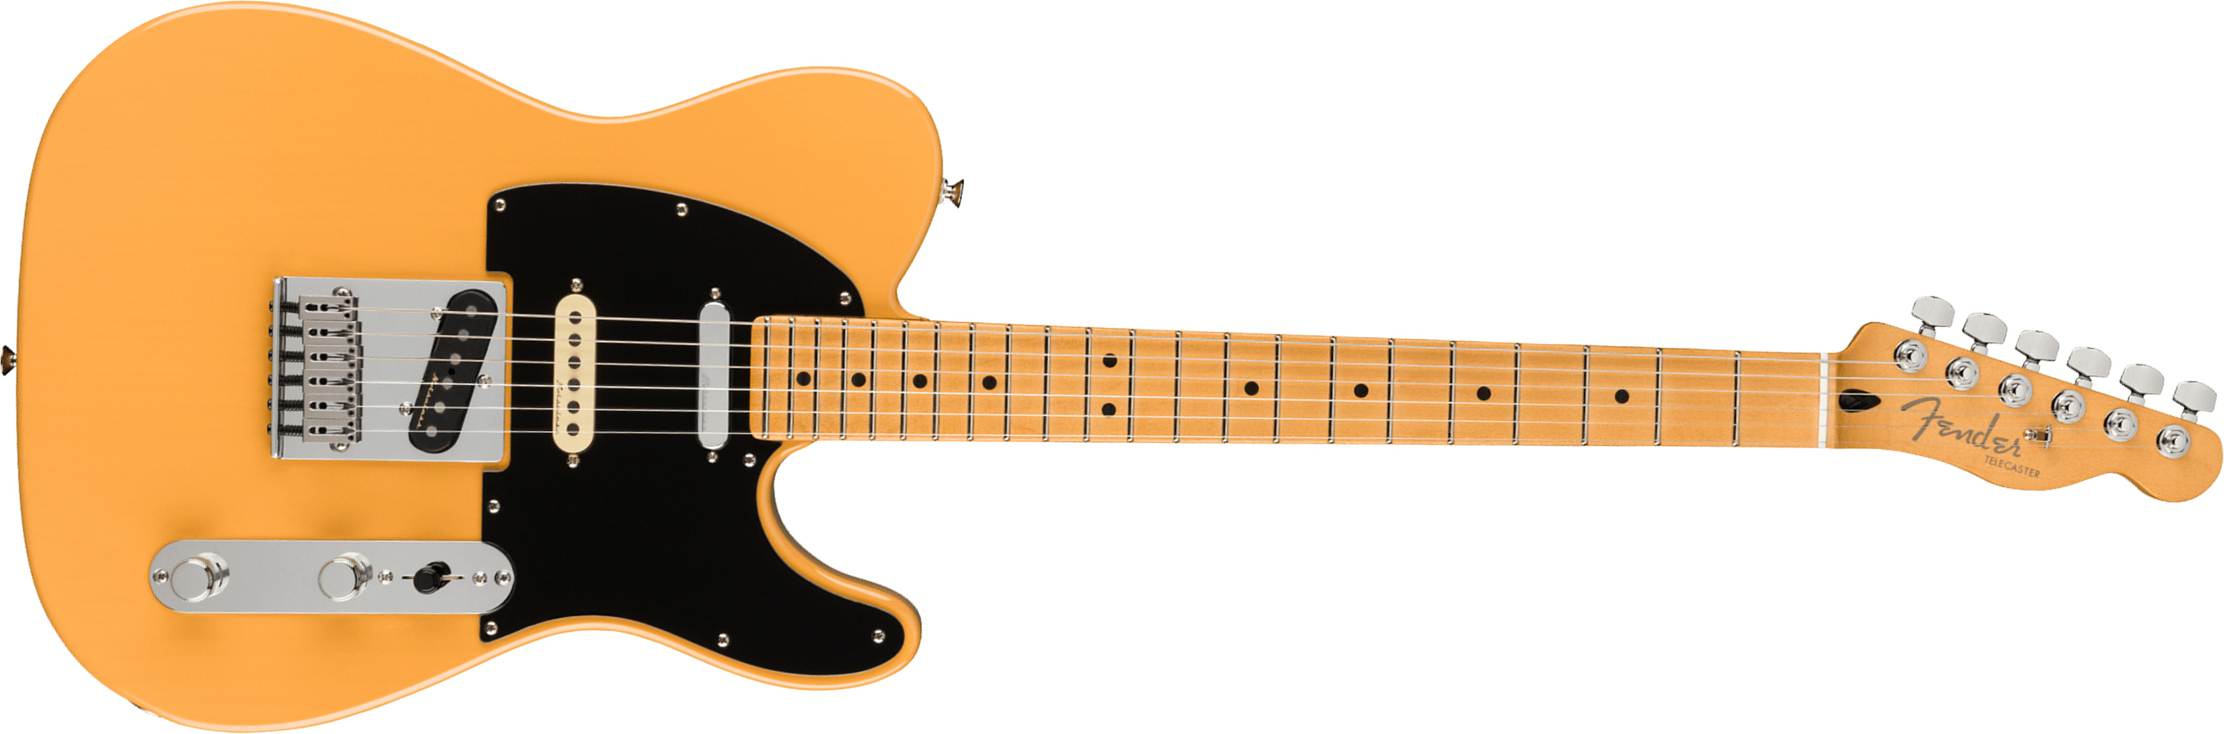 Fender Tele Player Plus Nashville Mex 3s Ht Mn - Butterscotch Blonde - Televorm elektrische gitaar - Main picture